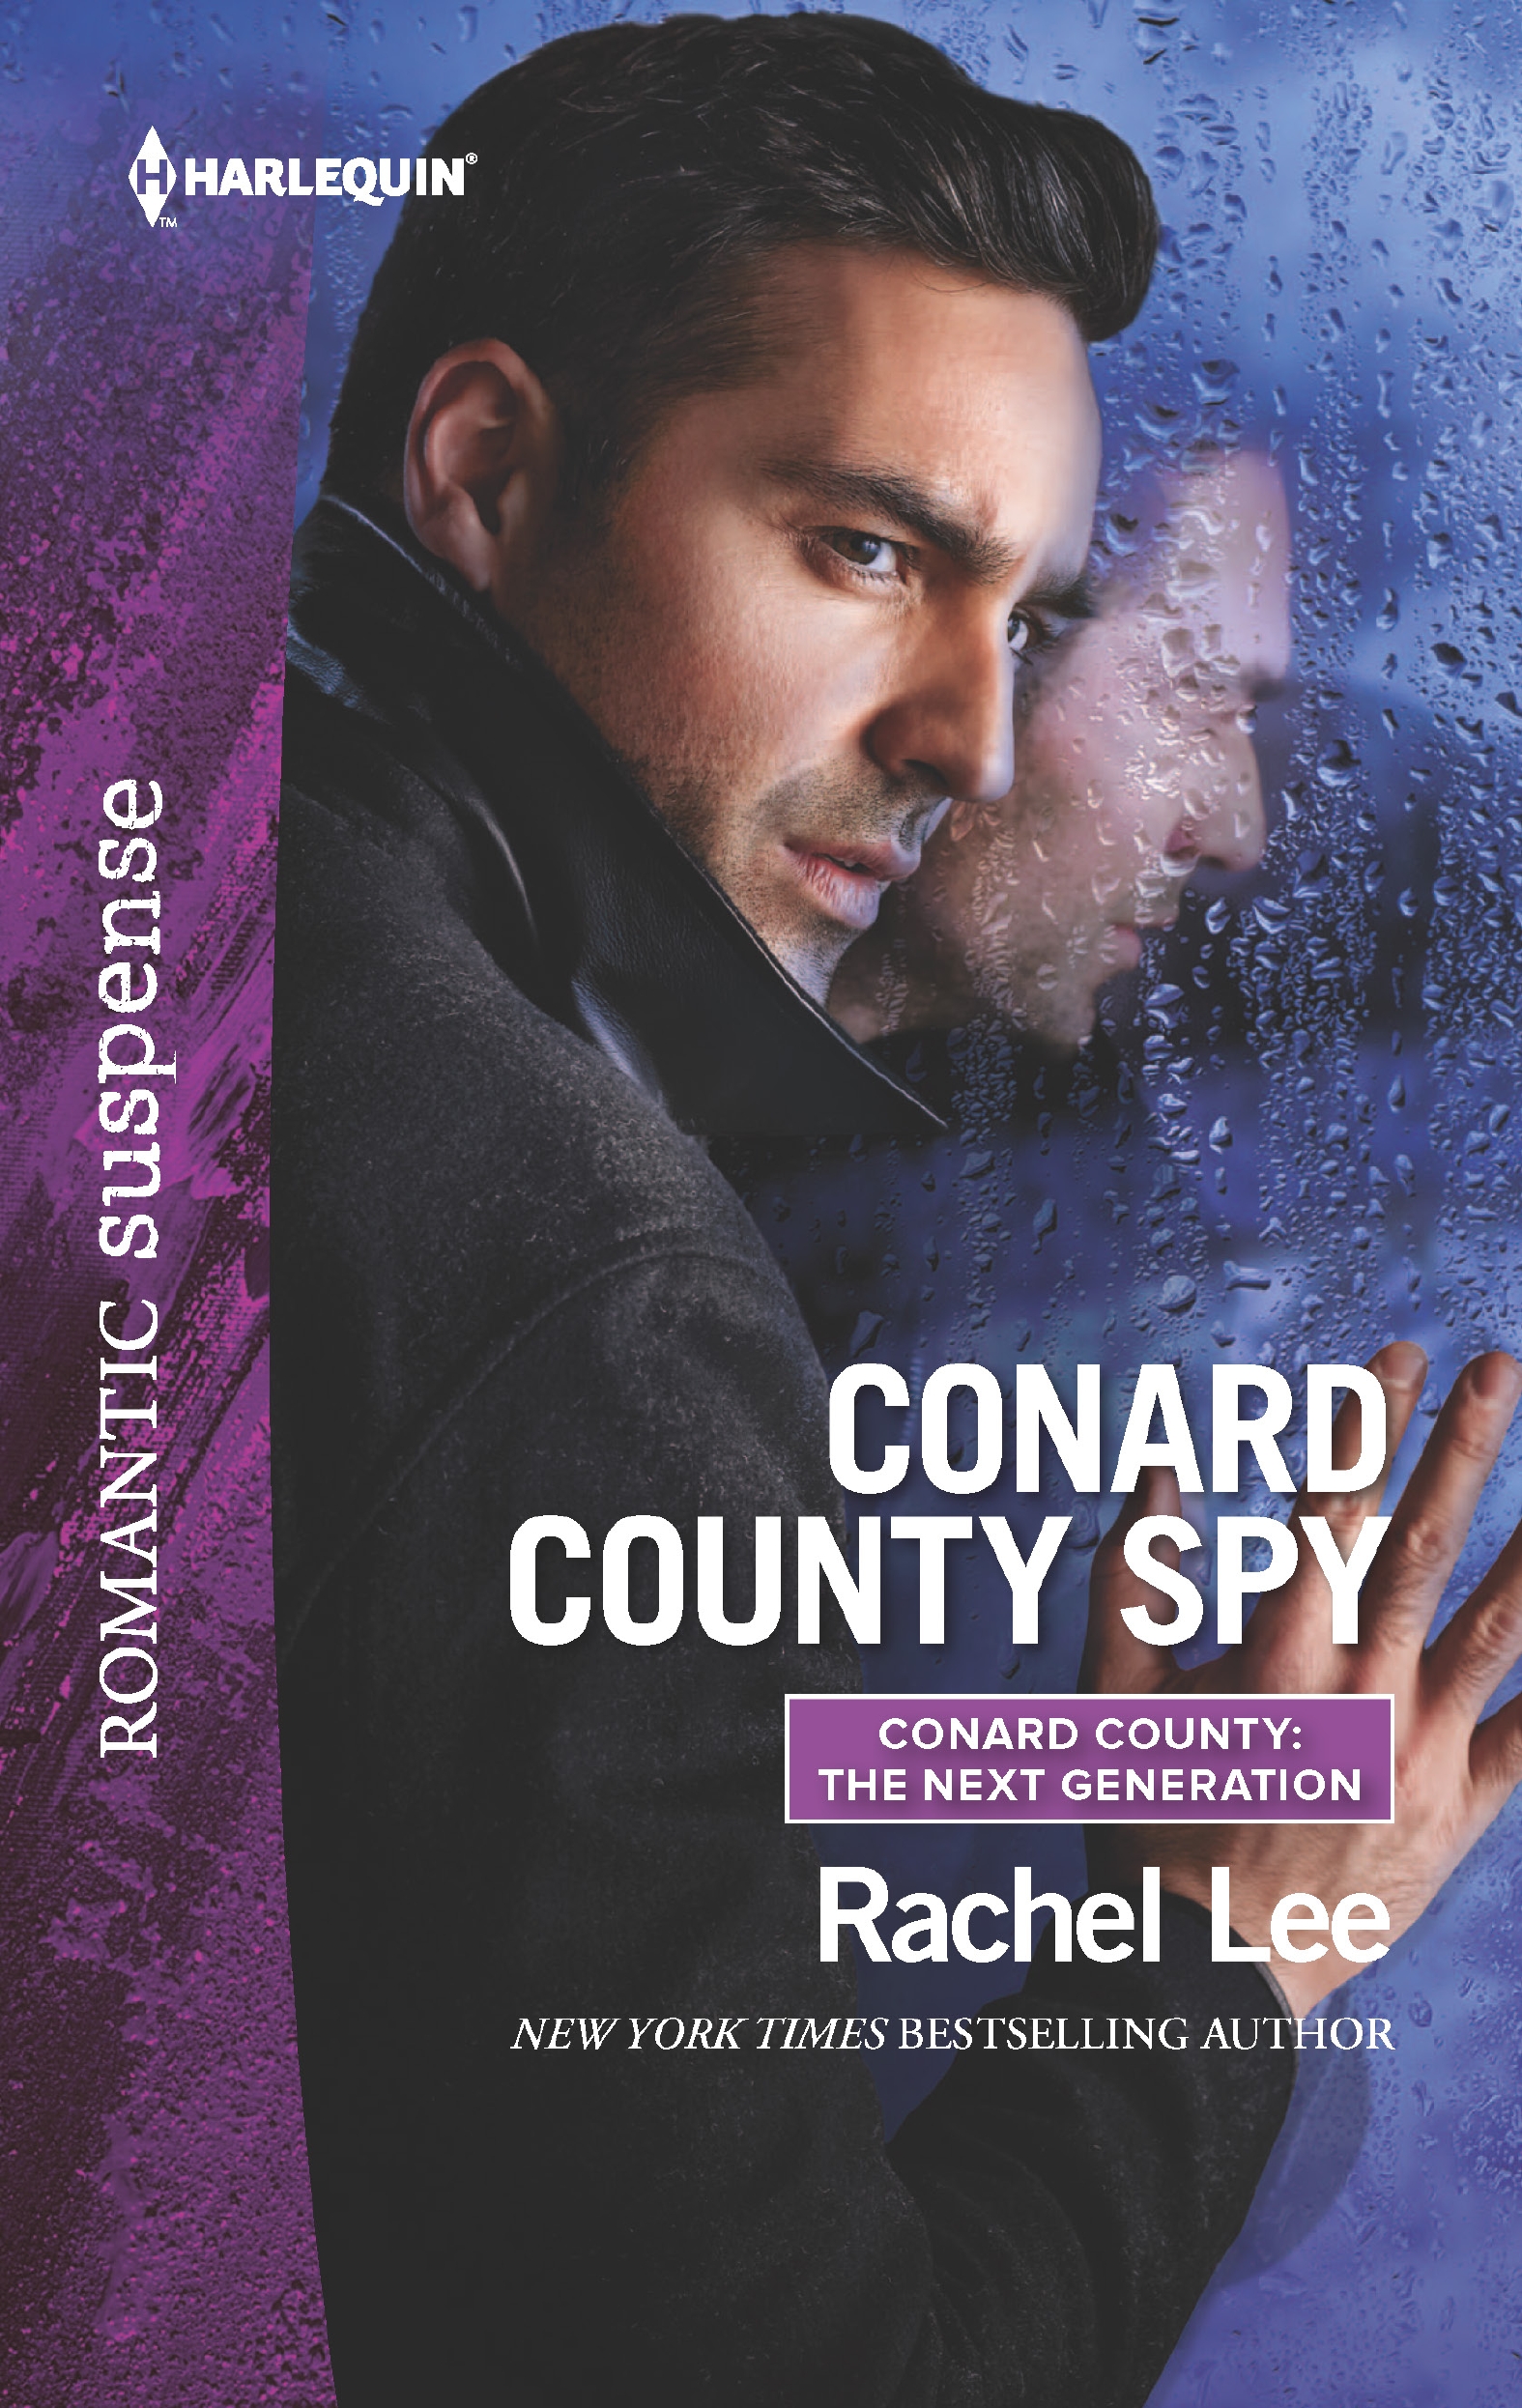 Conard County Spy (2016) by Rachel Lee